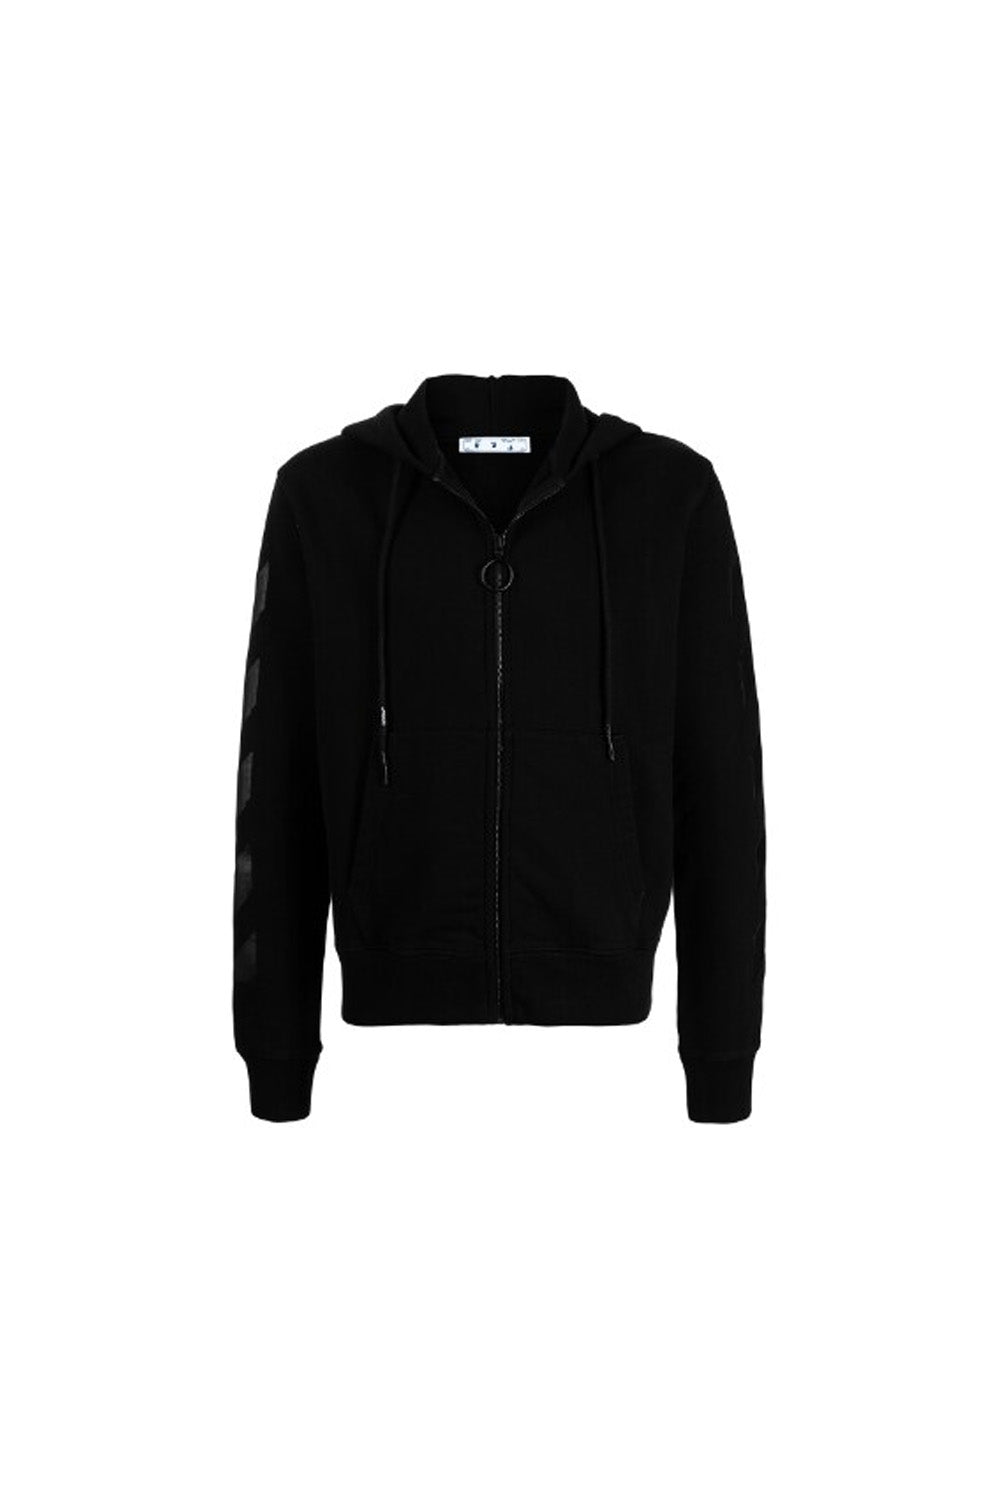 Off-White Diag Arrow-print zip-front hoodie